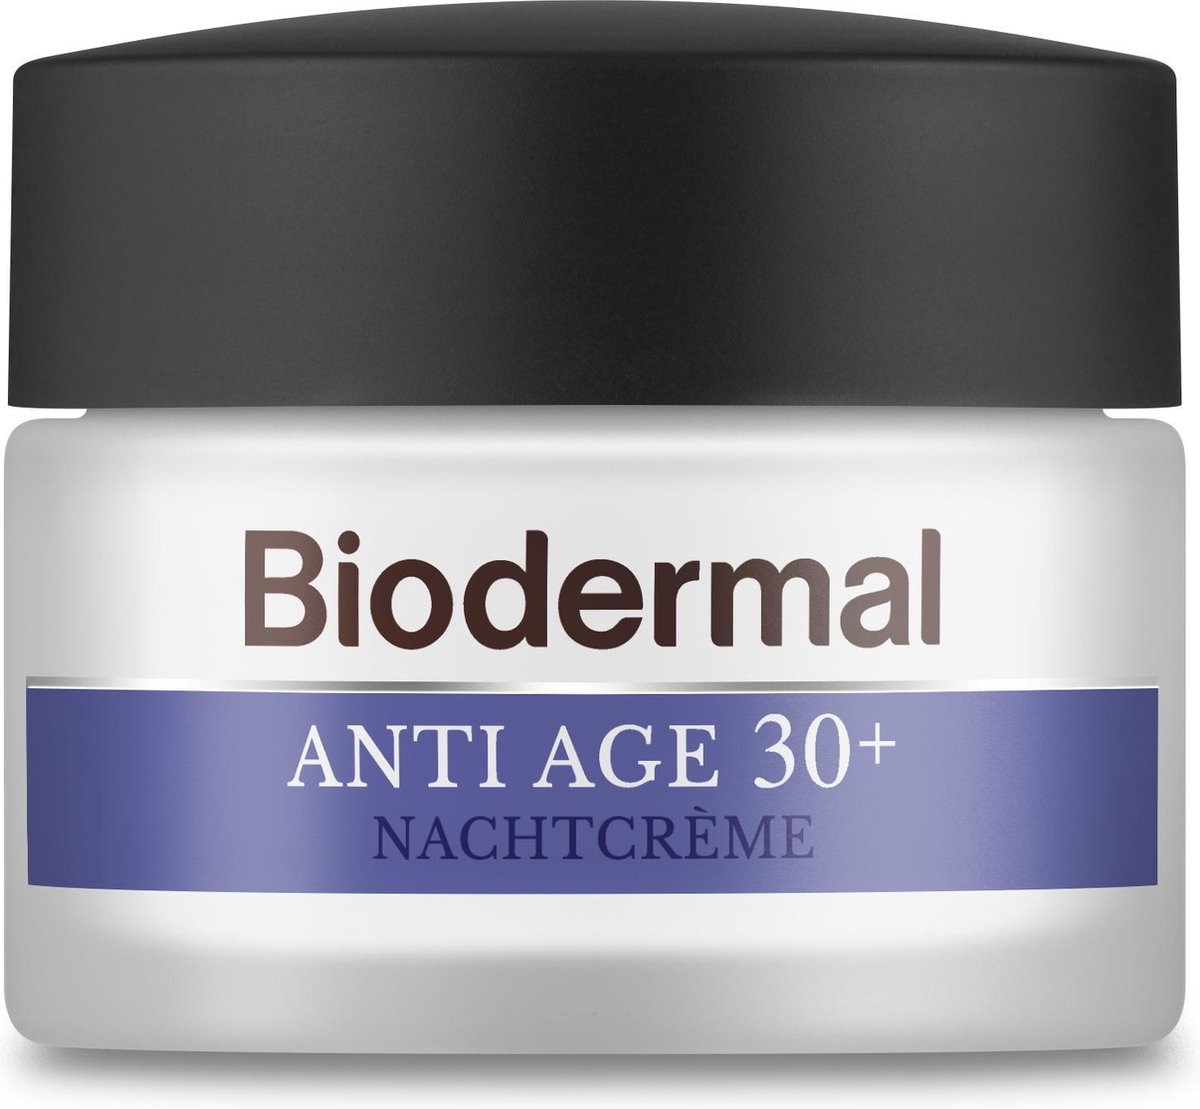 Biodermal Anti Age 30+ - Nachtcrème tegen huidveroudering - 50ml - Biodermal